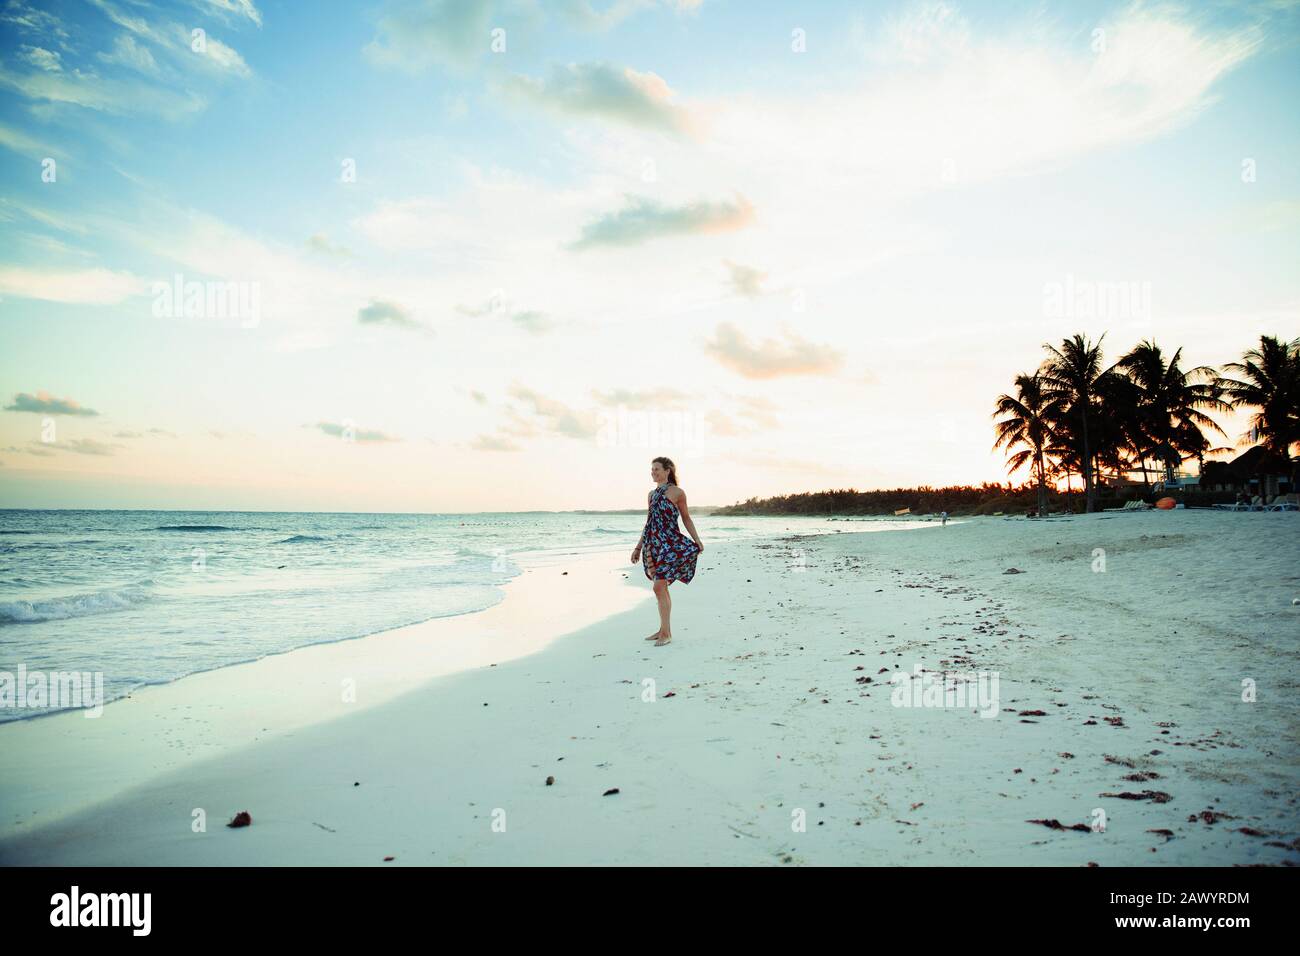 Carefree woman in sun dress on tropical ocean beach Mexico Stock Photo